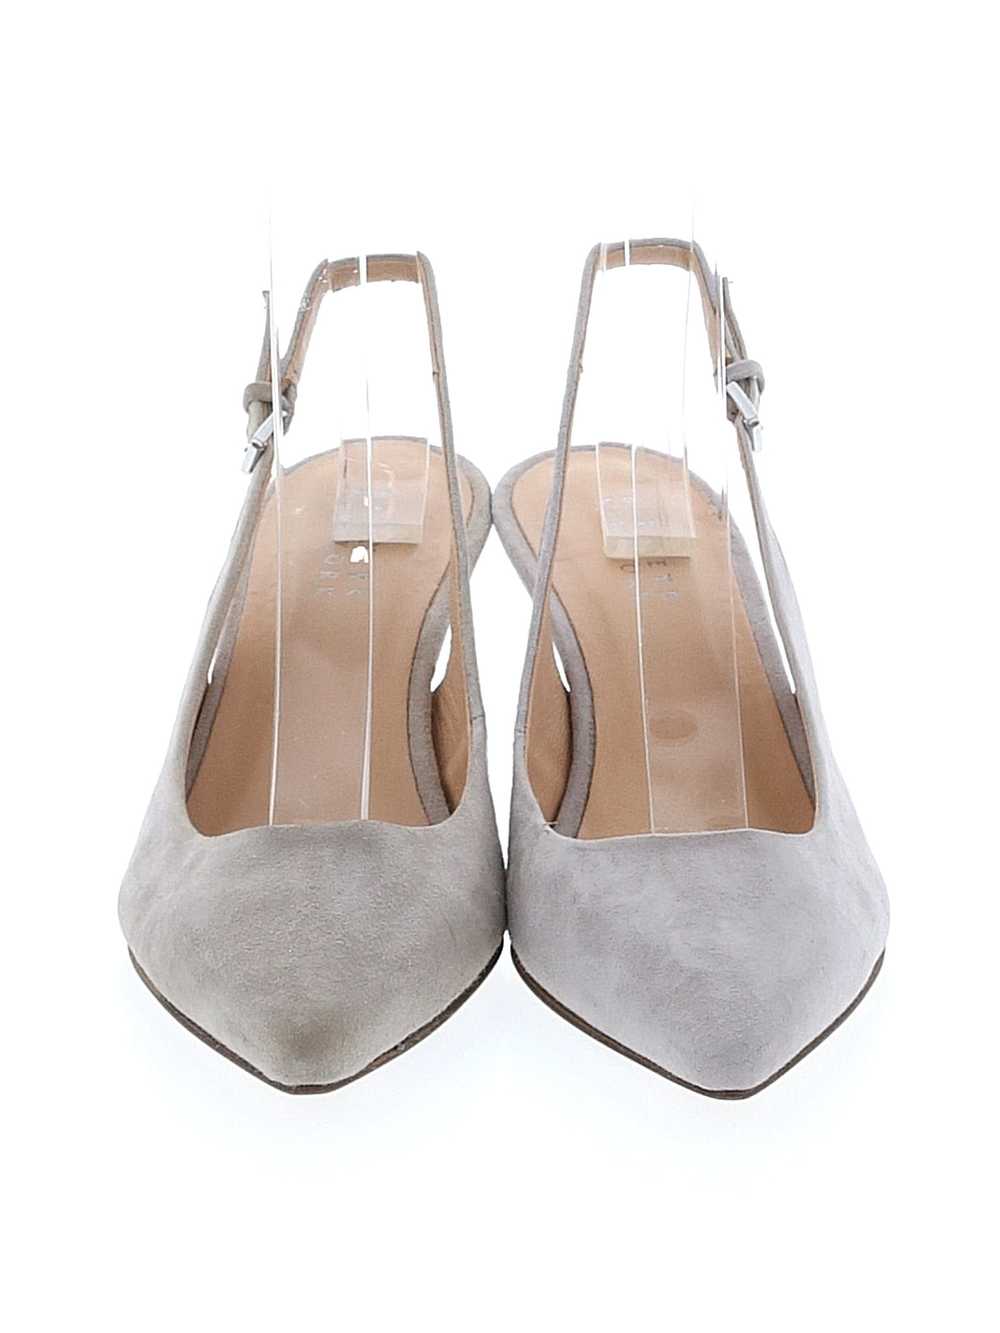 Barneys New York Women Gray Heels 36 eur - image 2